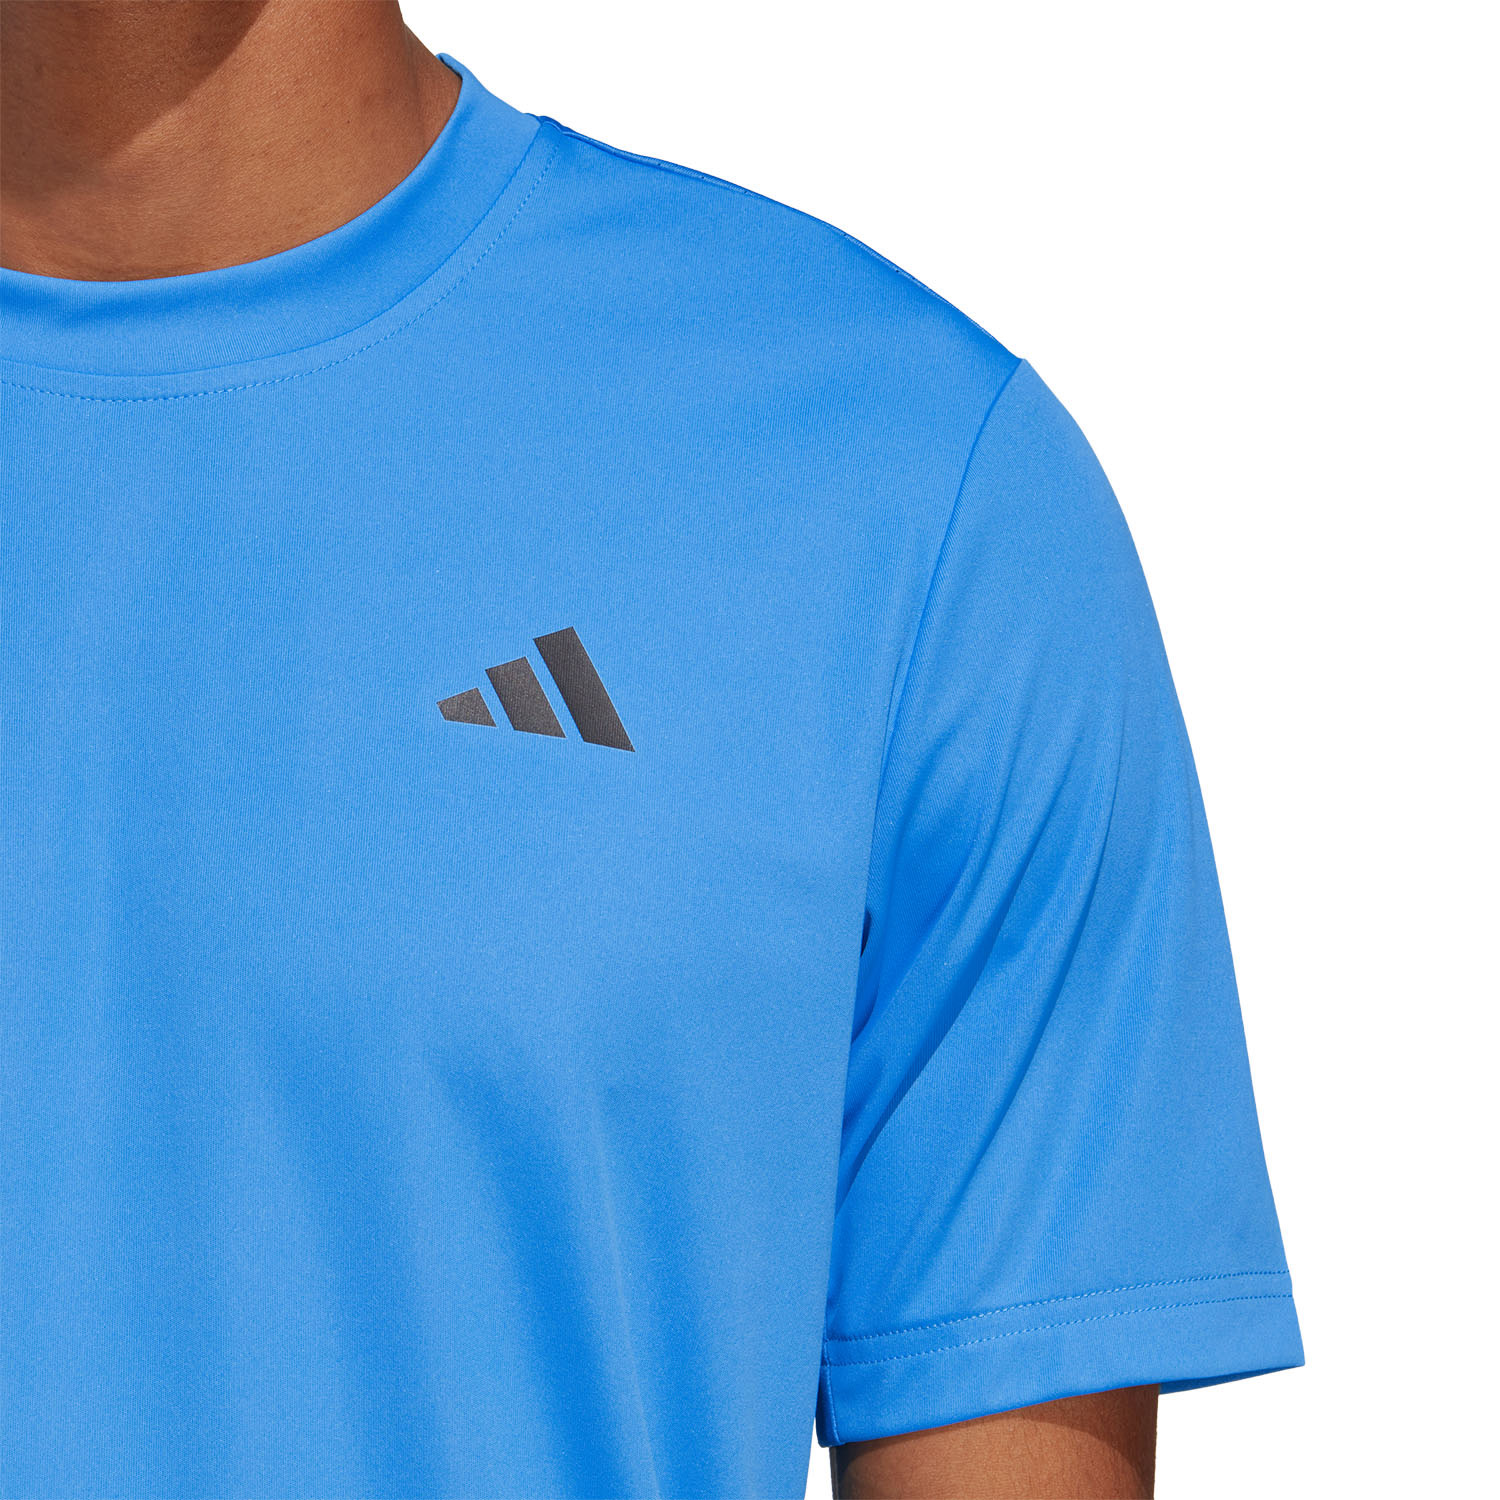 adidas Club Camiseta - Pulse Blue